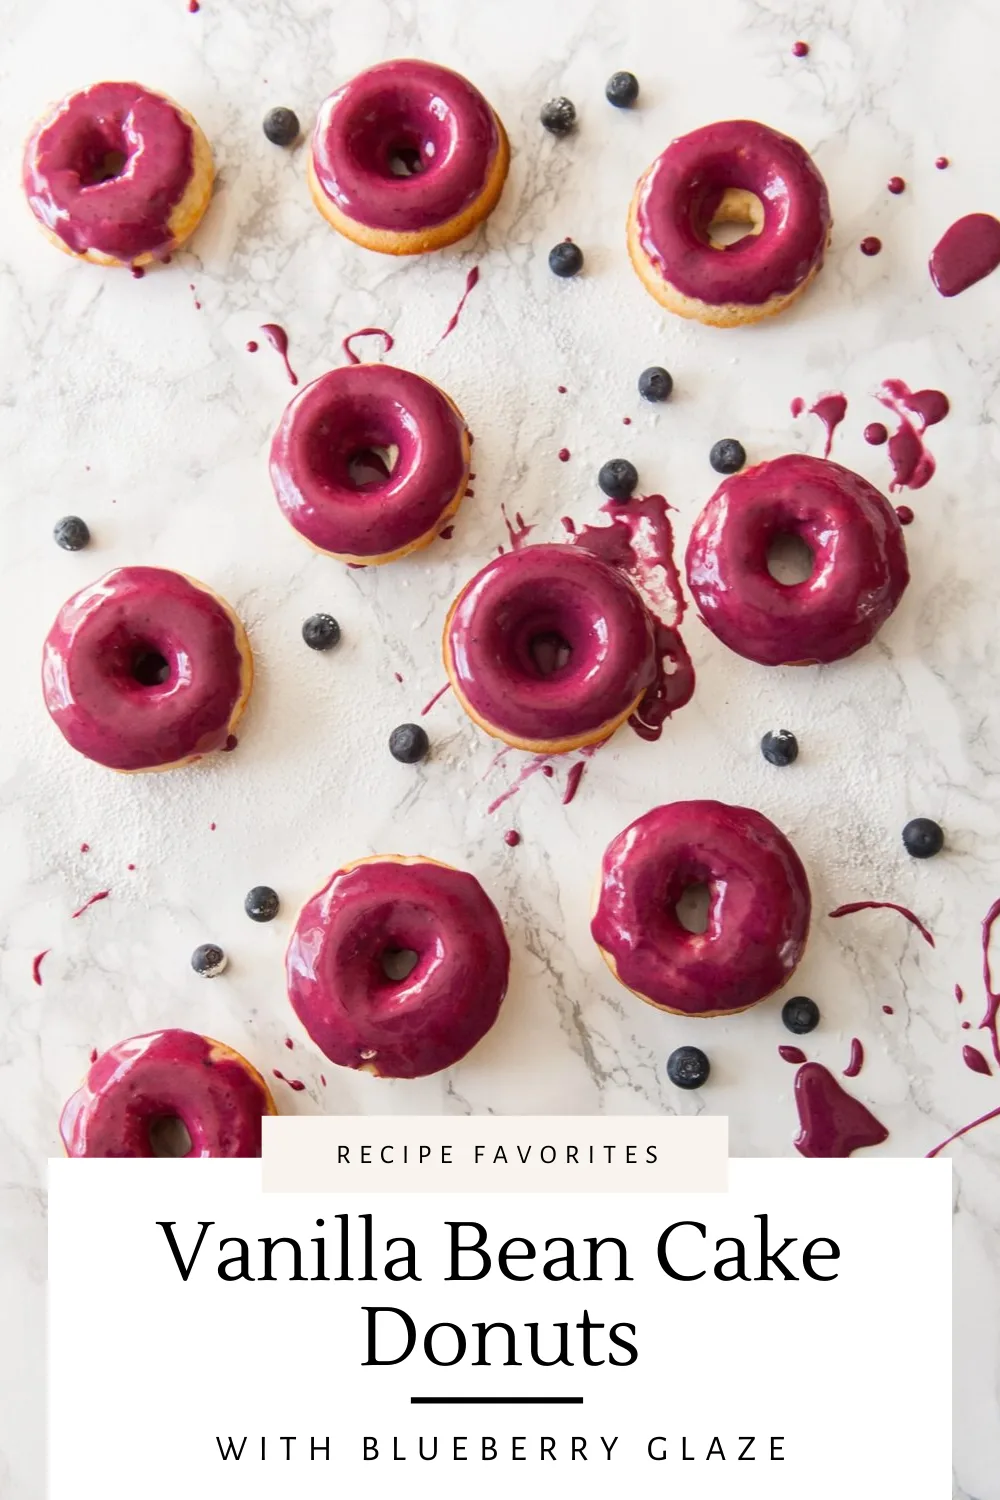 Vanilla Bean Cake Donuts with Blueberry Glaze